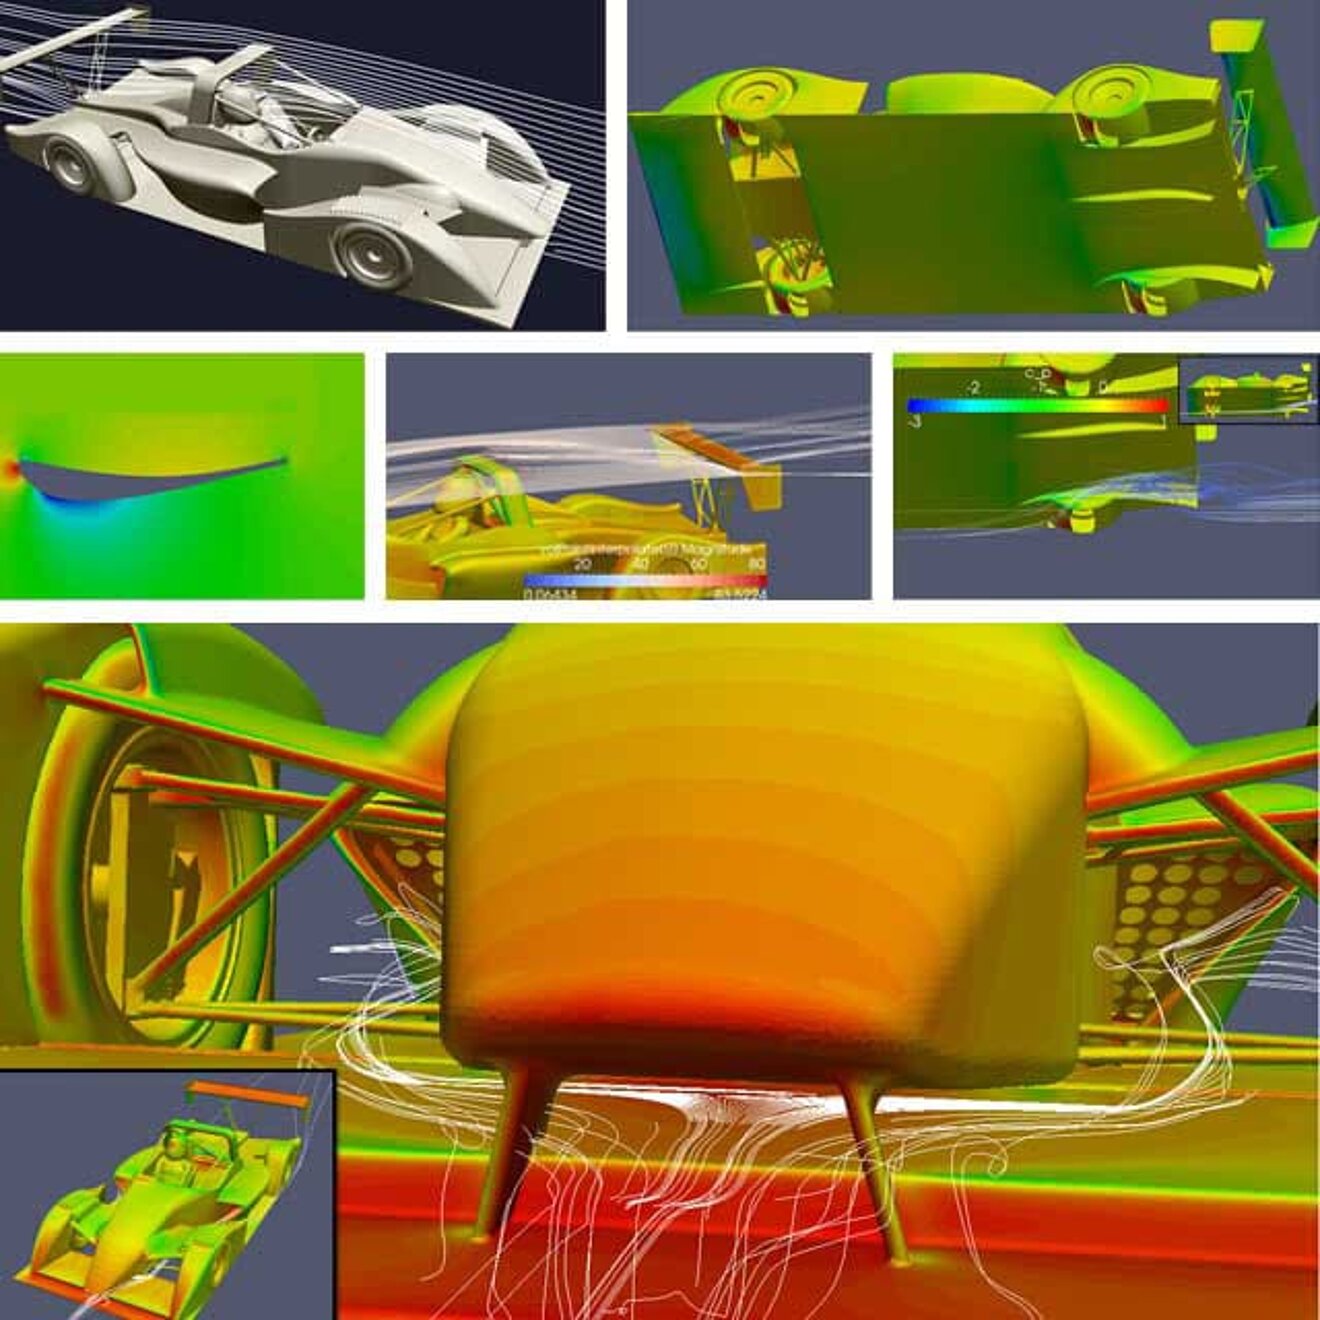 Image for Merkle & Partner Aerodynamics Results Example